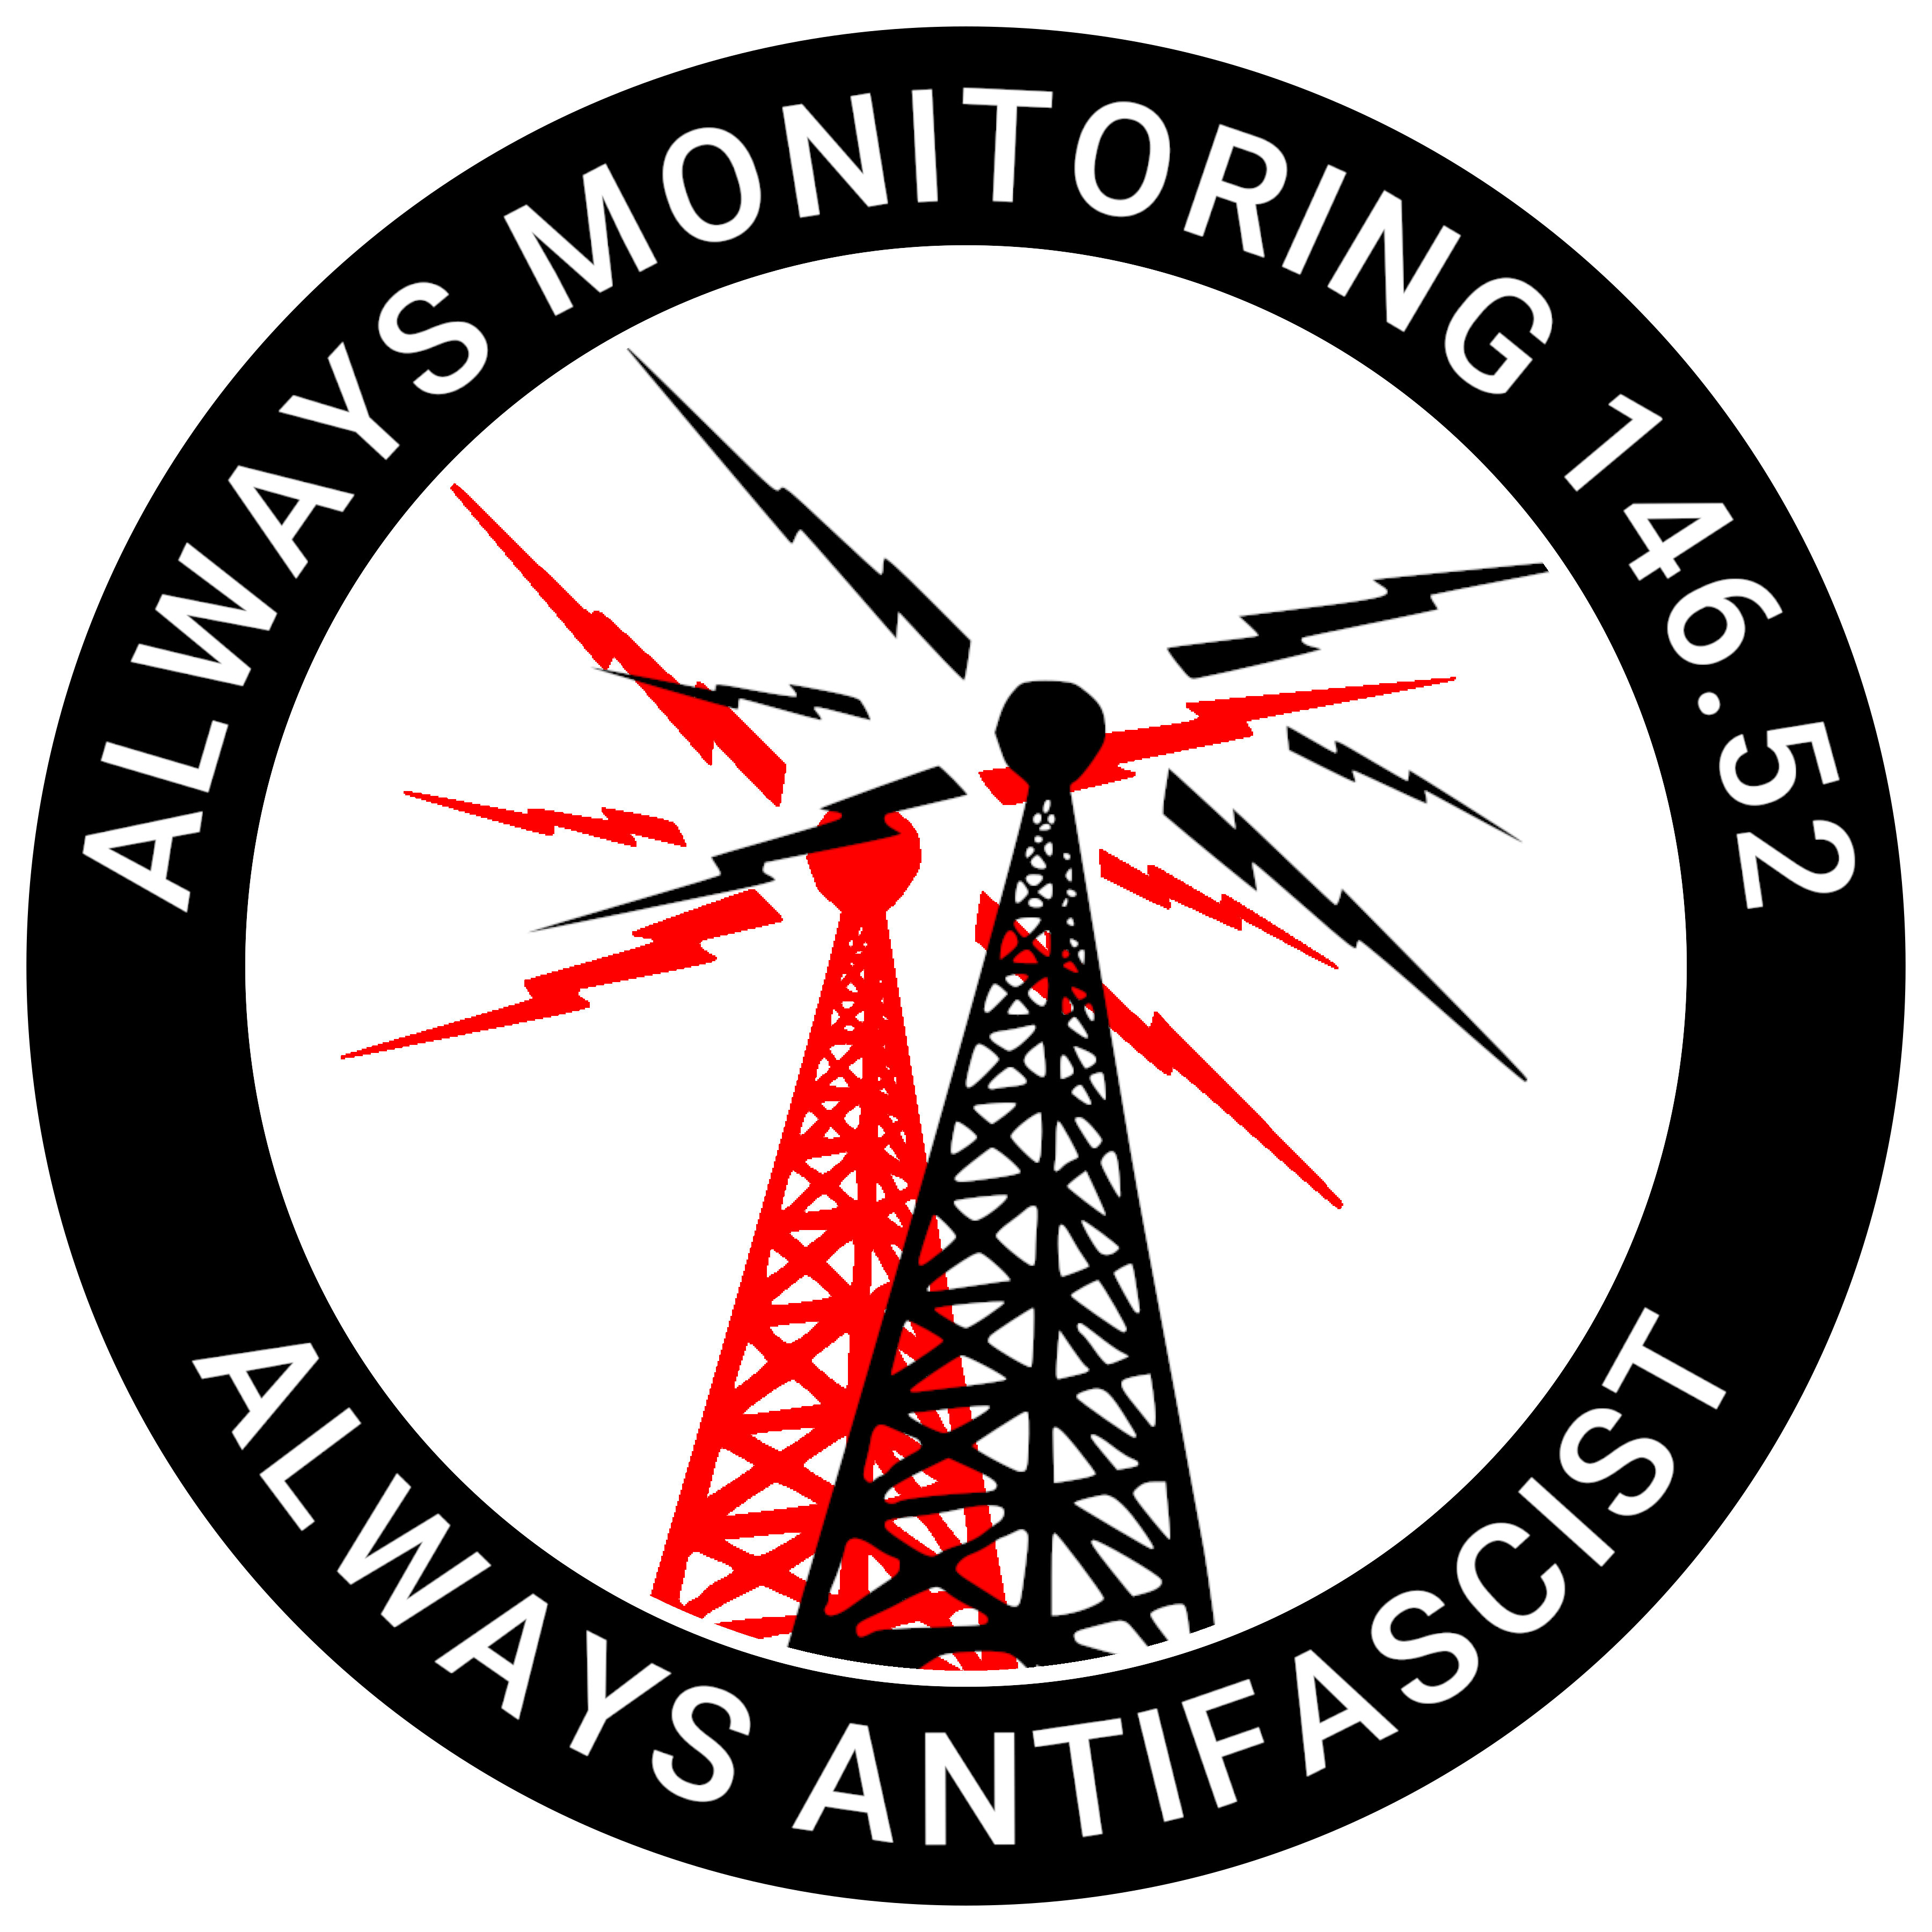 Always Monitoring 146.52, Always Antifascist